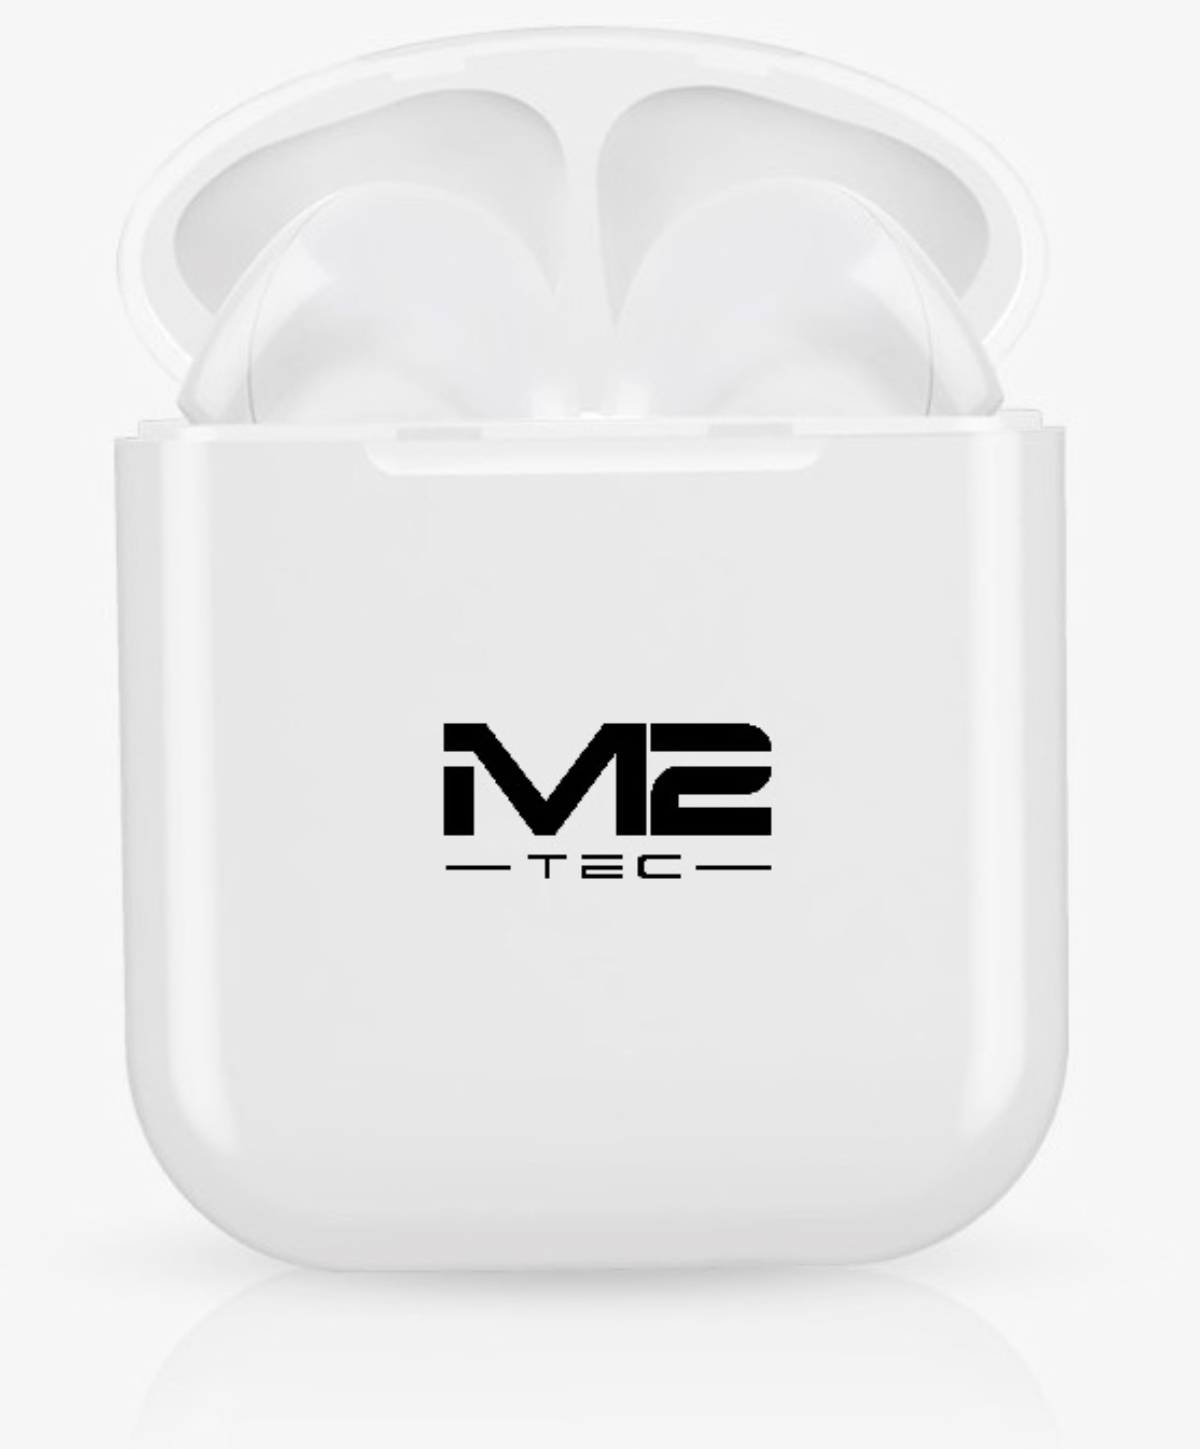 M2-TEC Kopfhörer, In-ear Weiß Bluetooth Kopfhörer